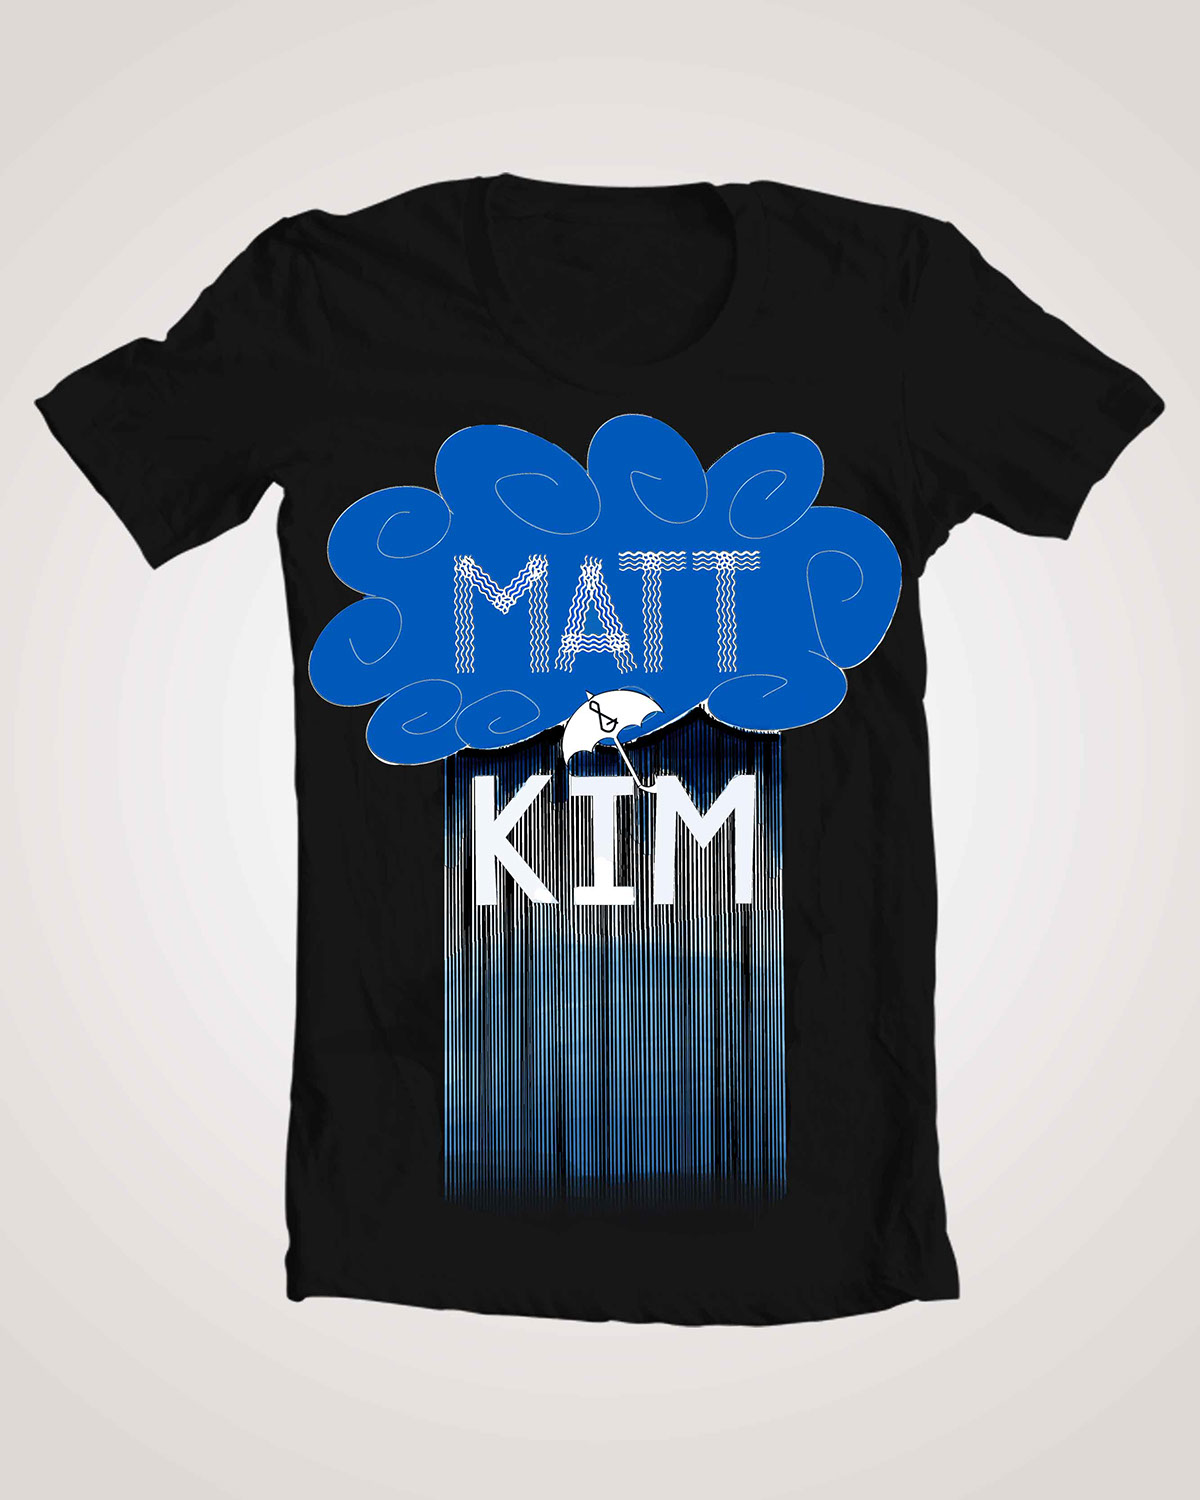 matt and kim contest t-shirts illustrated type design Layout